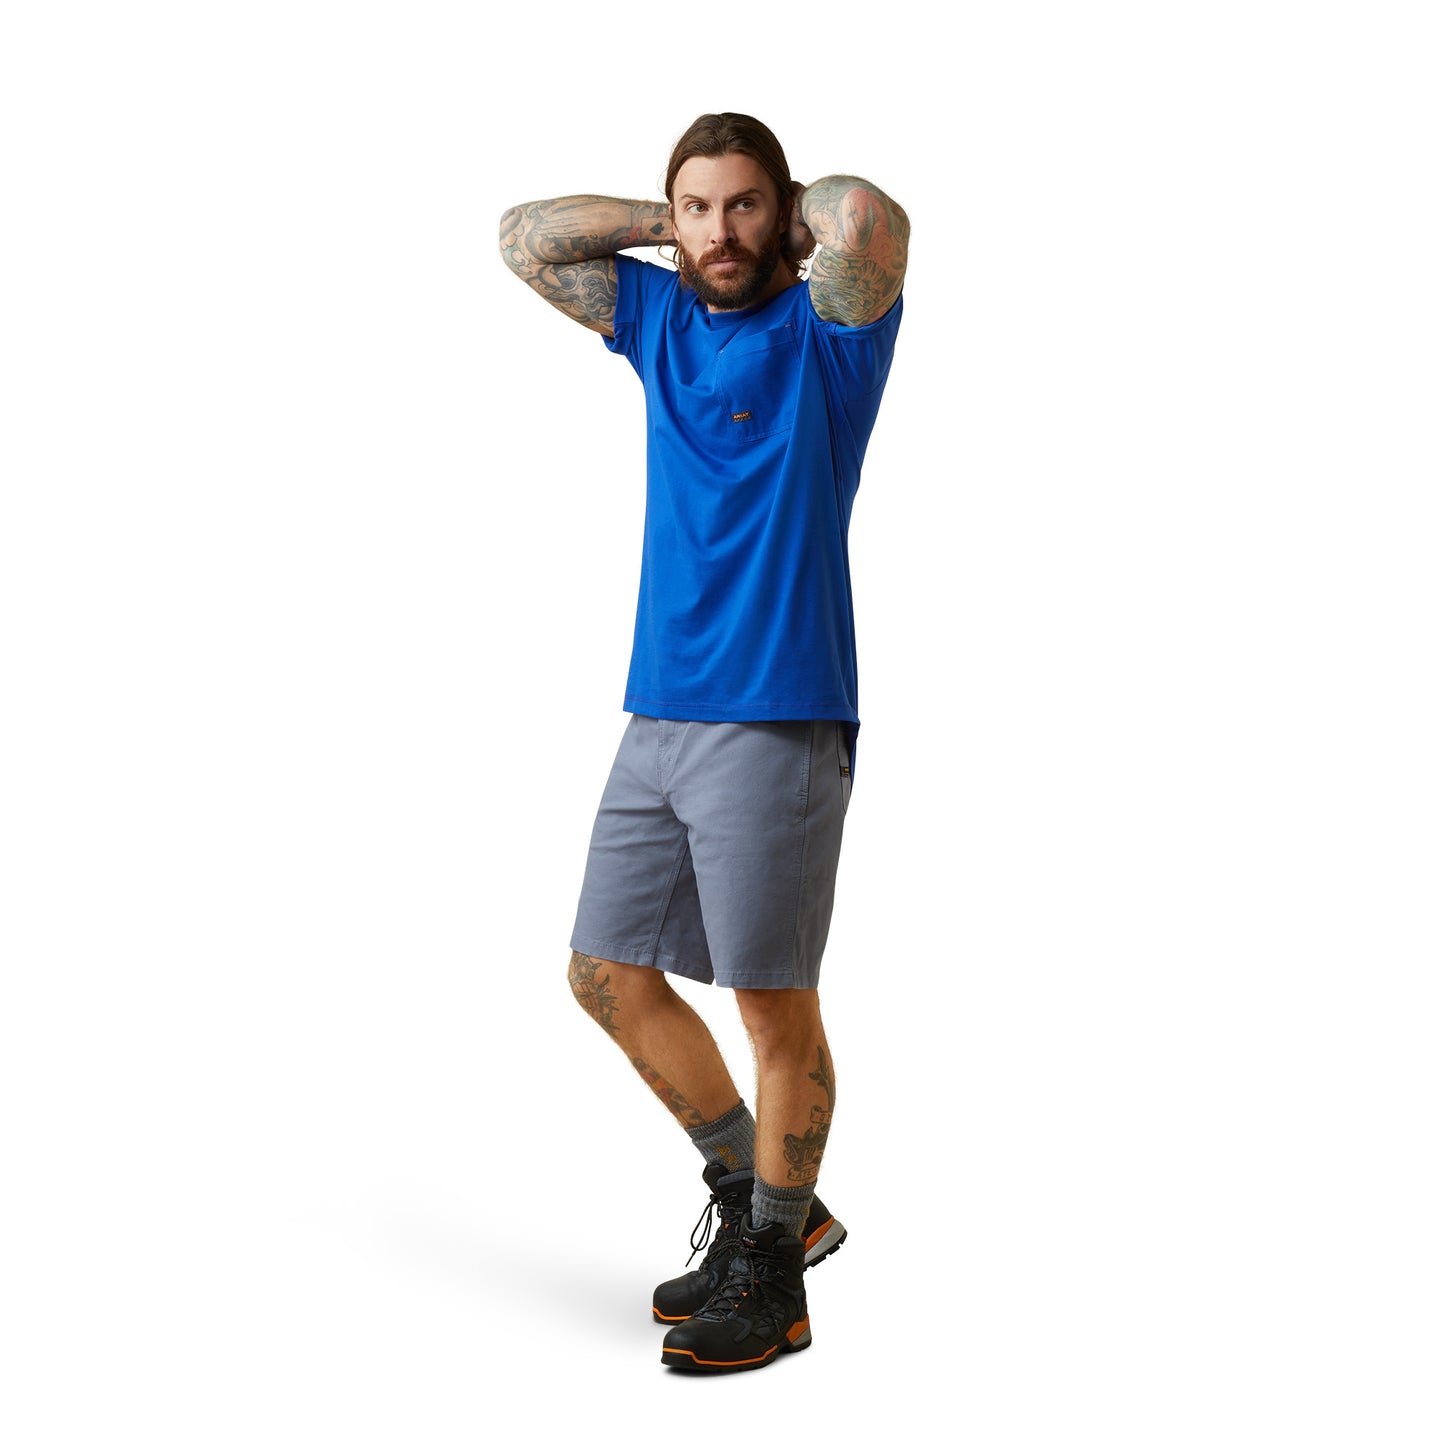 Ariat® Men's Rebar Workman USA Logo Royal Blue T-Shirt 10043560